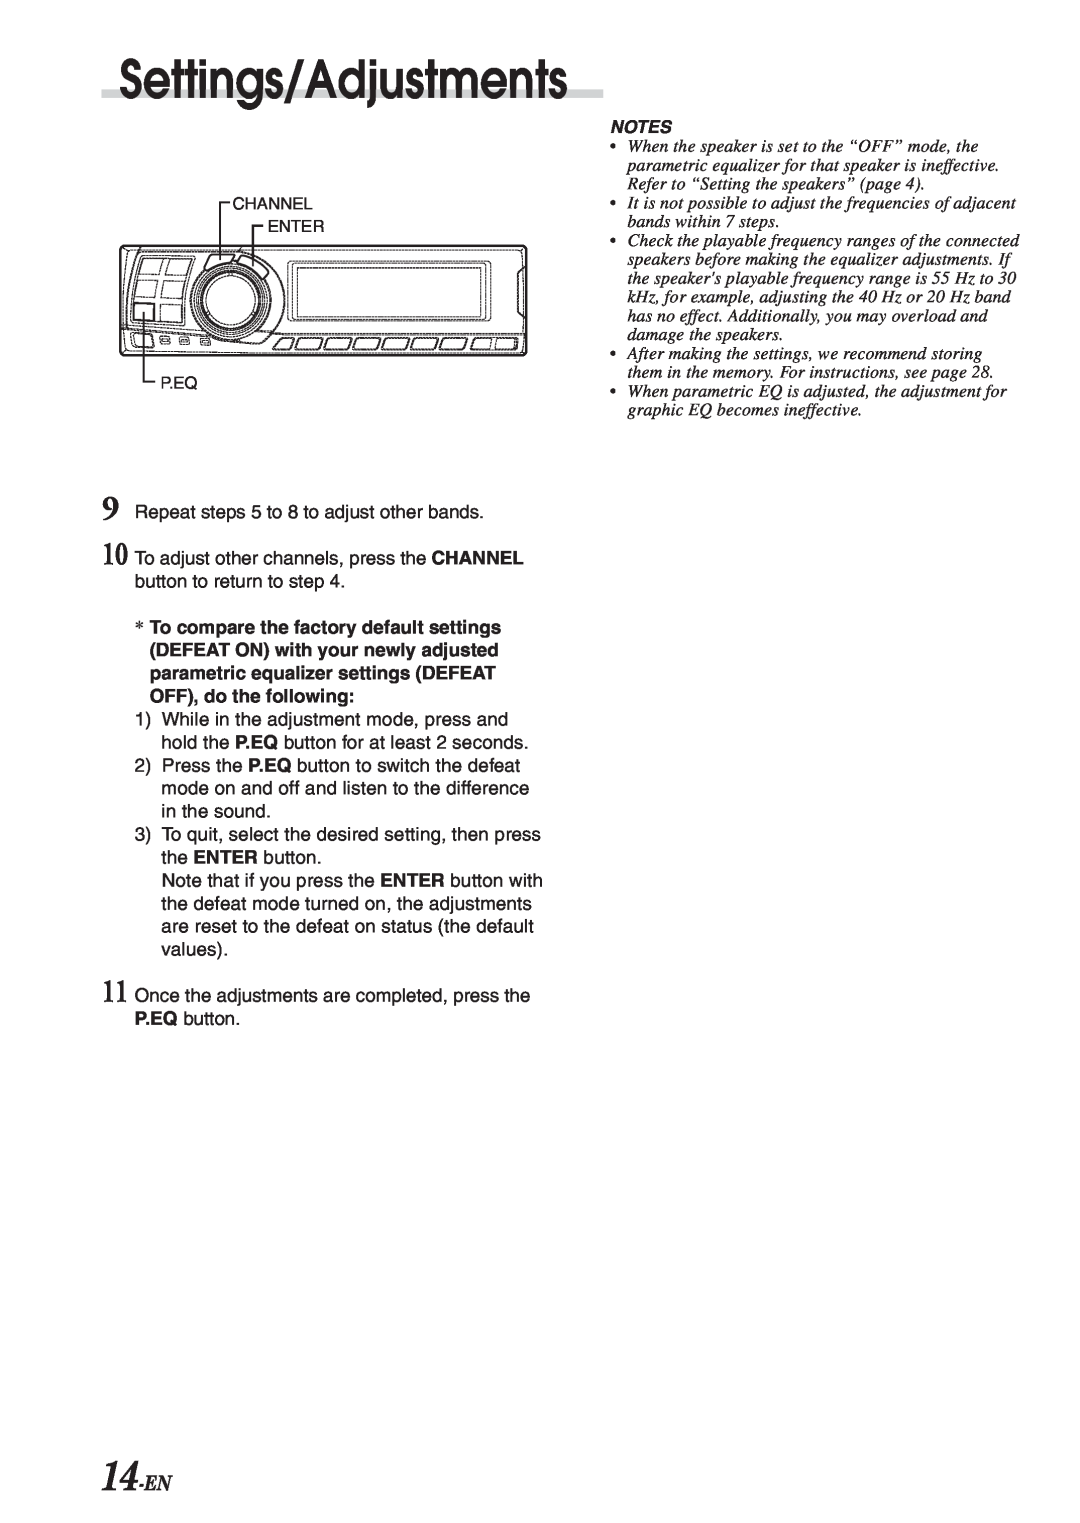 Alpine PXA-H701 owner manual 14-EN, Settings/Adjustments, Channel Enter P.Eq 